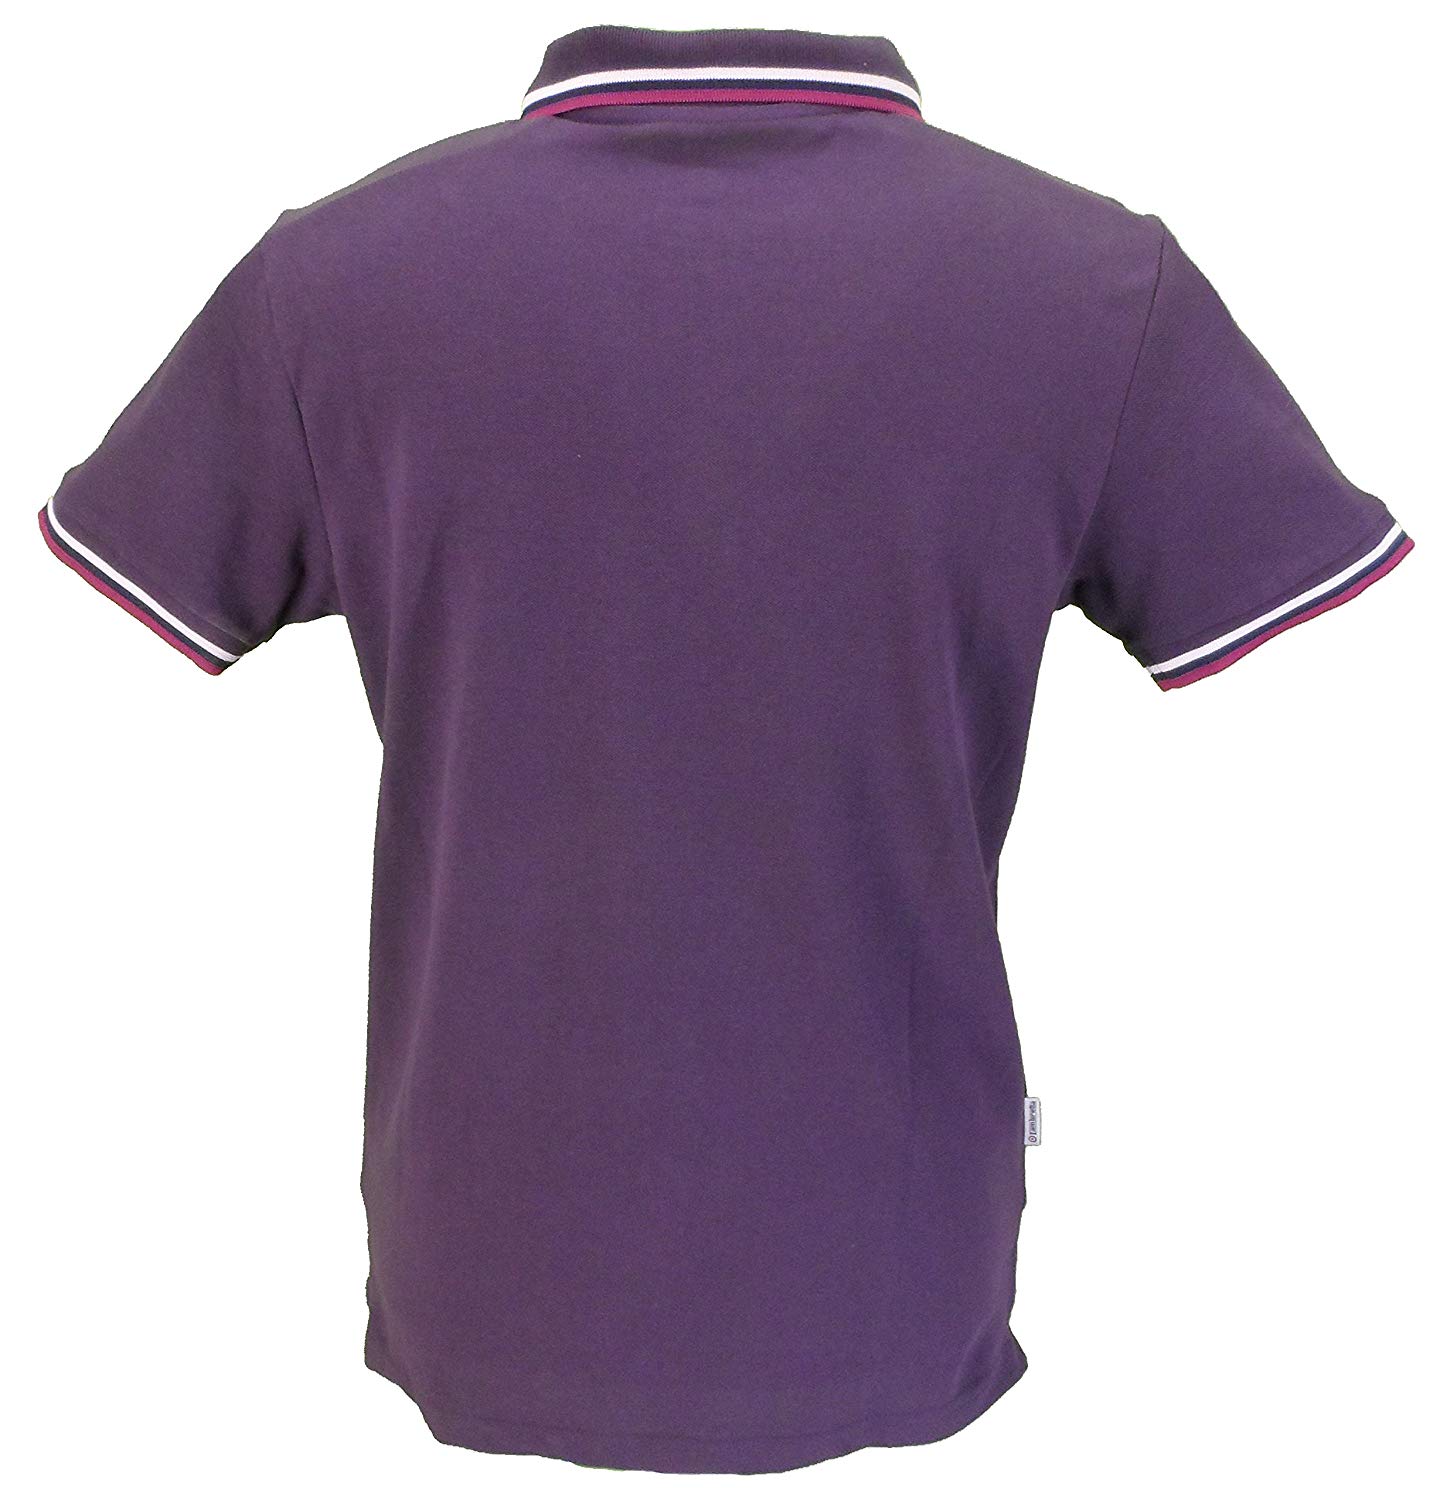 Lavender Polo Logo - Lambretta Purple Tipped Polo Shirts .: Amazon.co.uk: Clothing